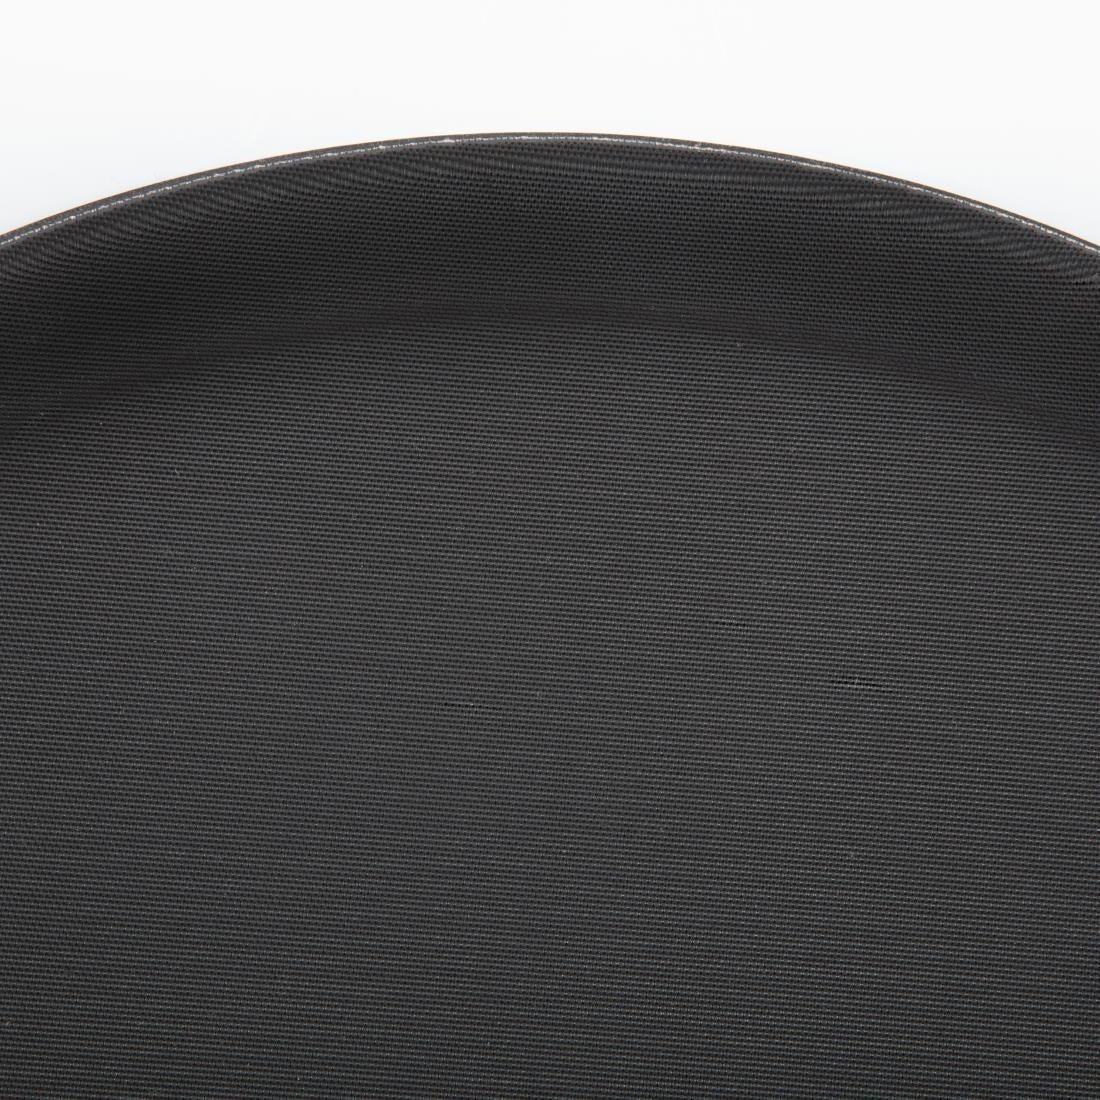 Kristallon Polypropylene Round Non-Slip Tray Black 356mm JD Catering Equipment Solutions Ltd